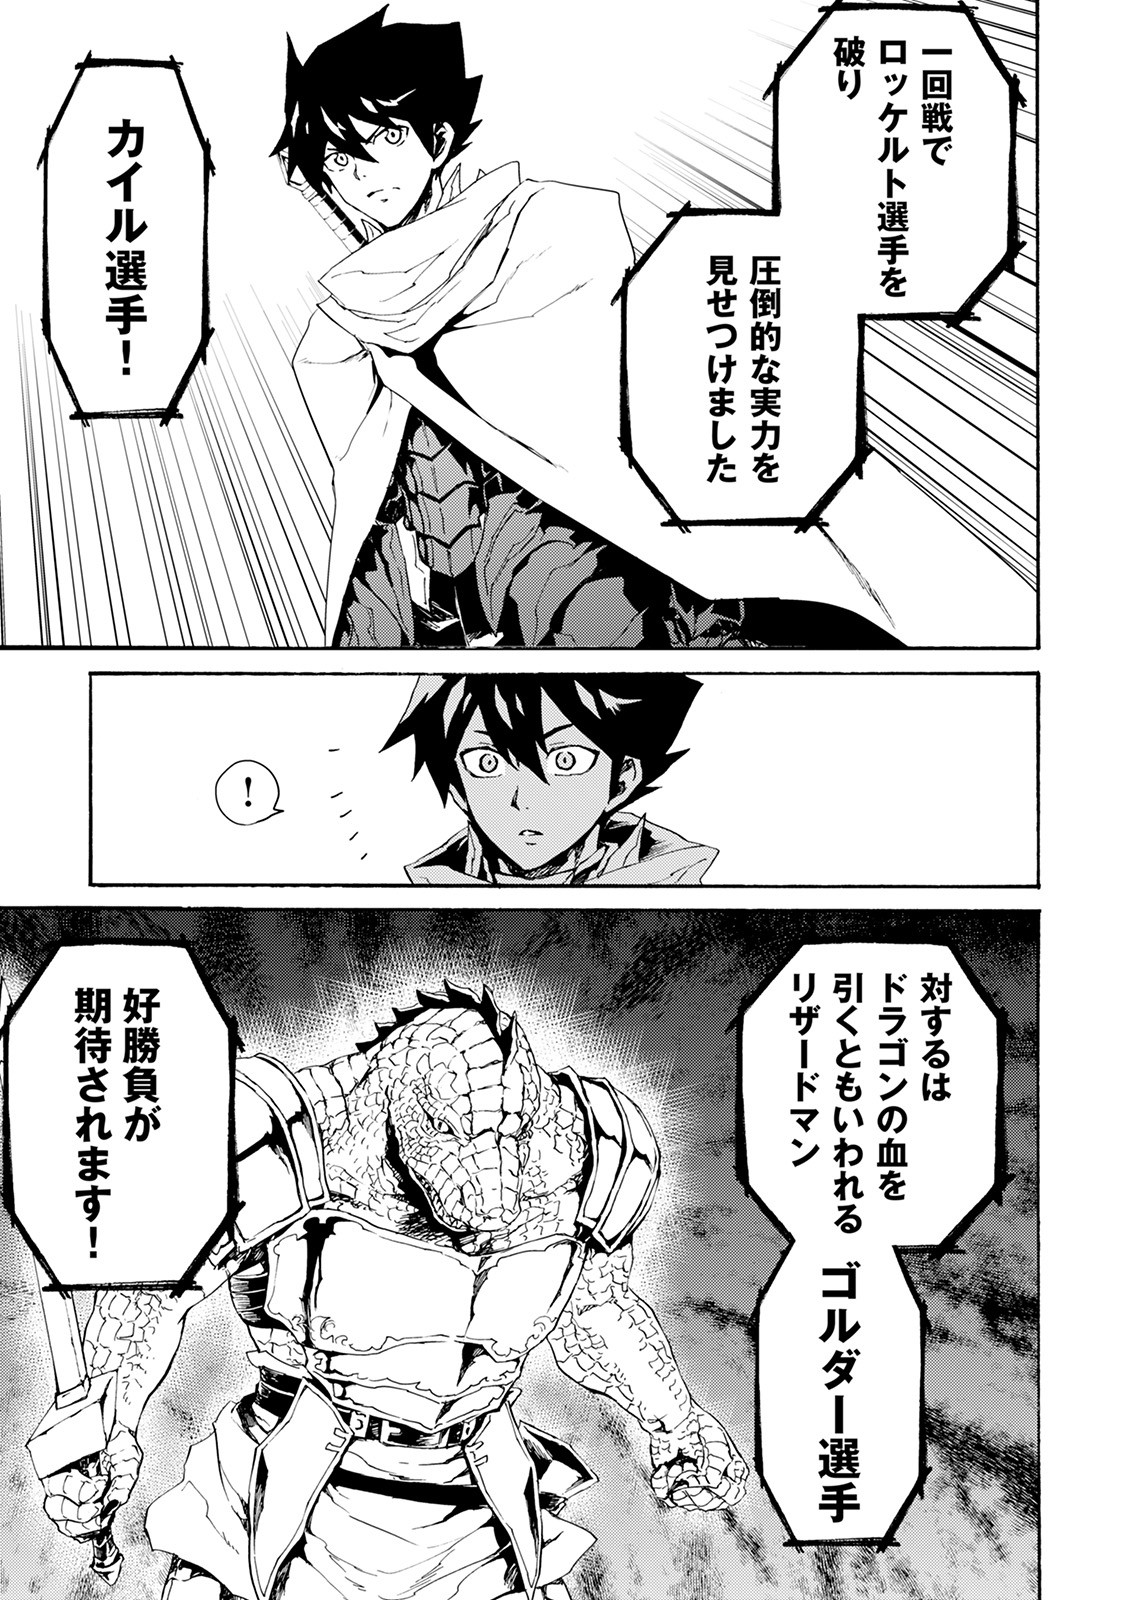 Tsuyokute New Saga - Chapter 38 - Page 3